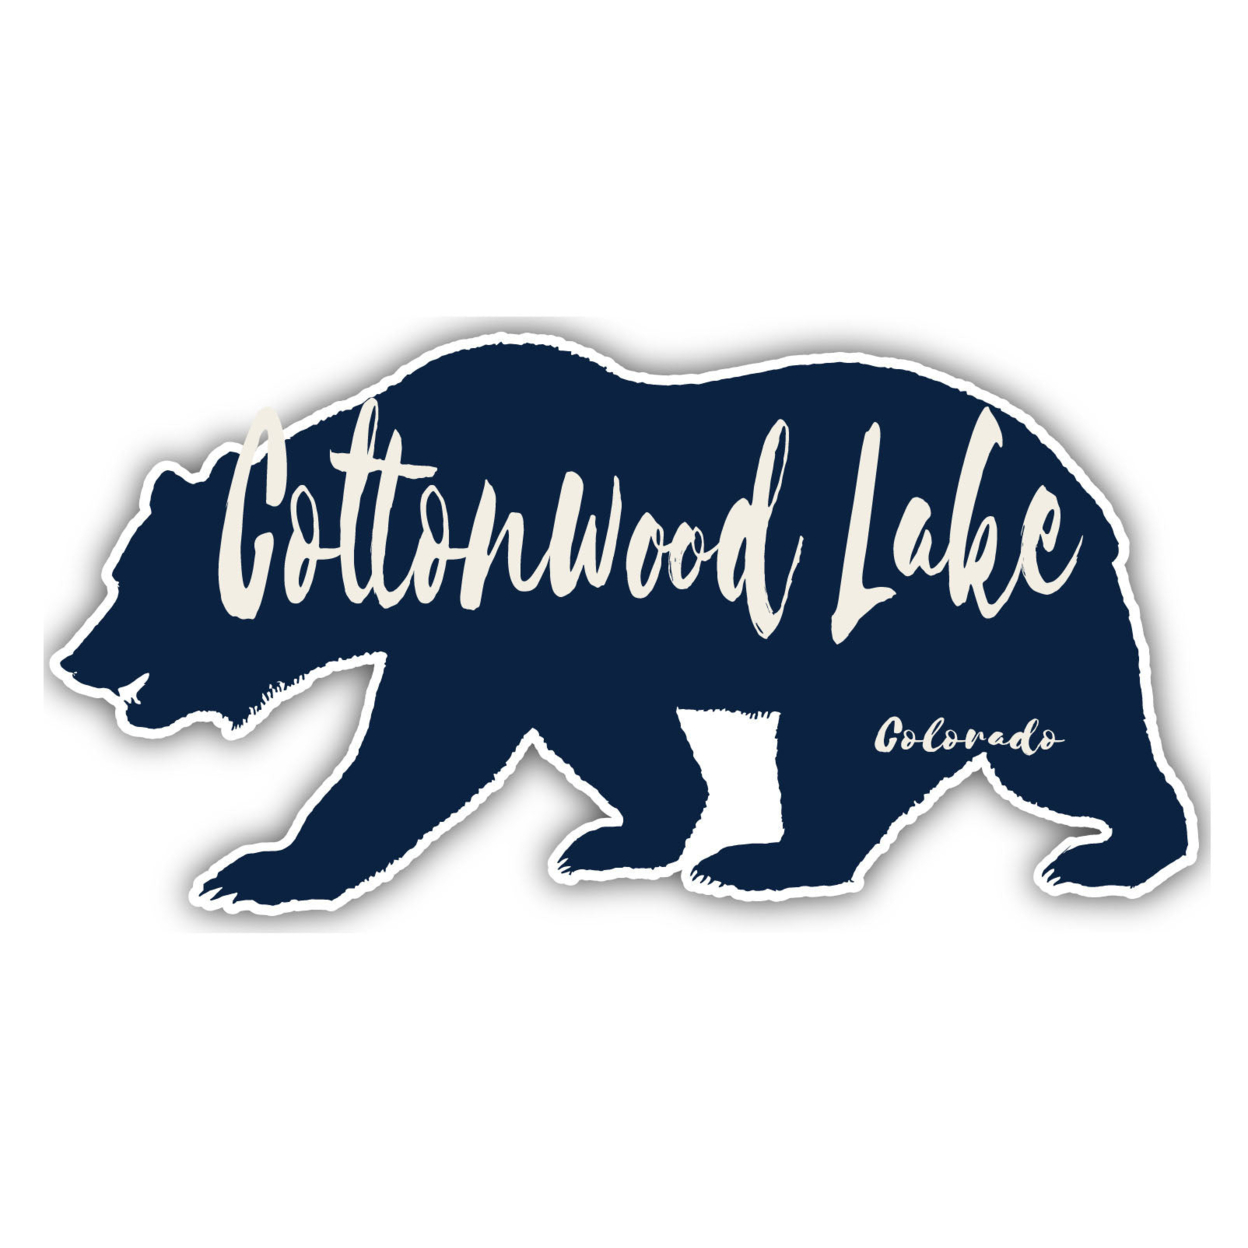 Cottonwood Lake Colorado Souvenir Decorative Stickers (Choose Theme And Size) - Single Unit, 2-Inch, Bear